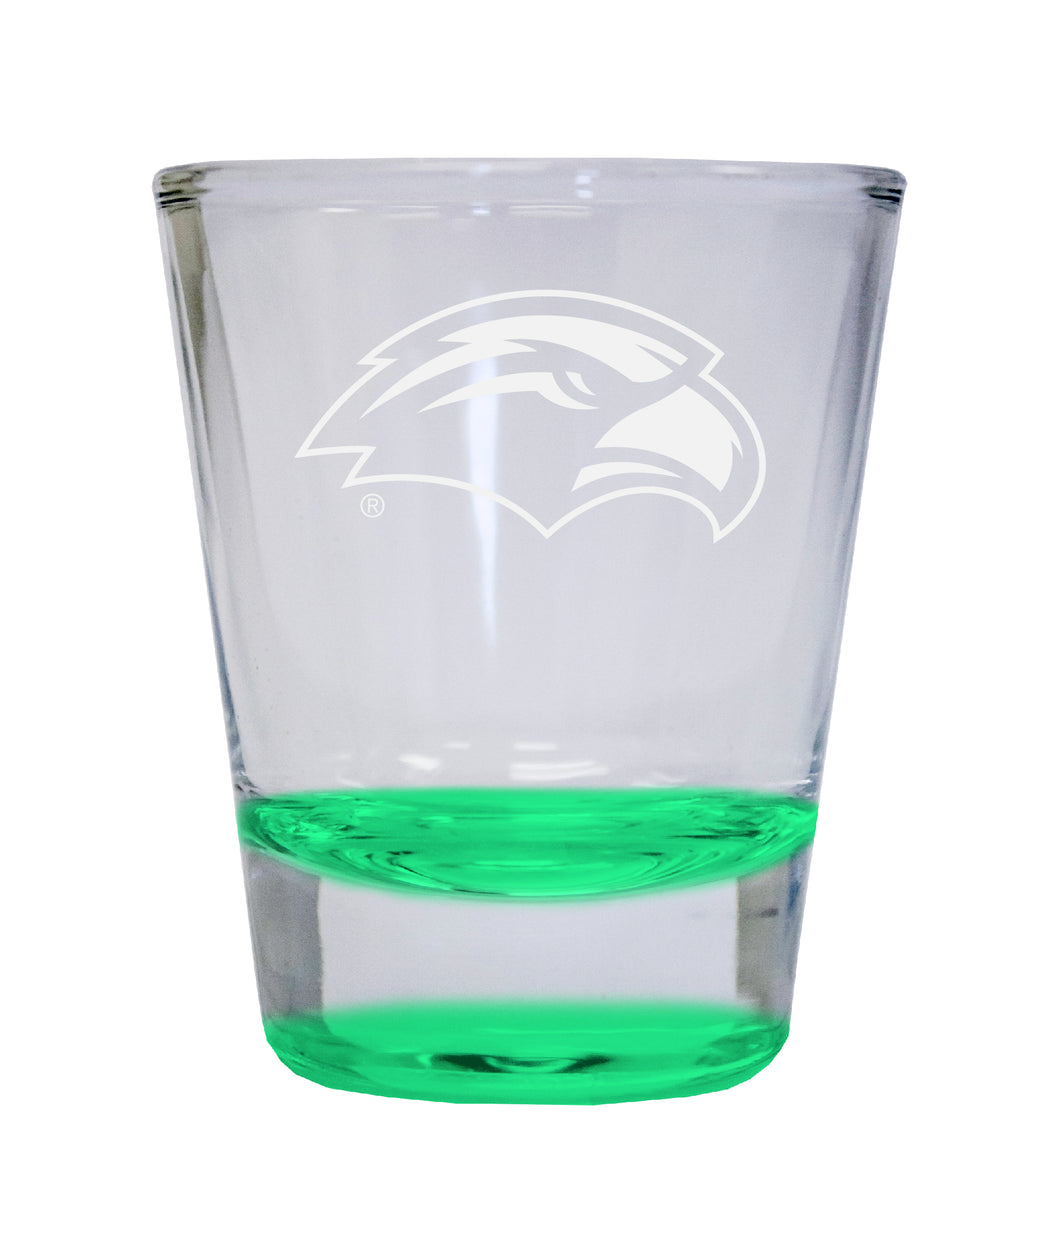 NCAA Southern Mississippi Golden Eagles Collector's 2oz Laser-Engraved Spirit Shot Glass Green